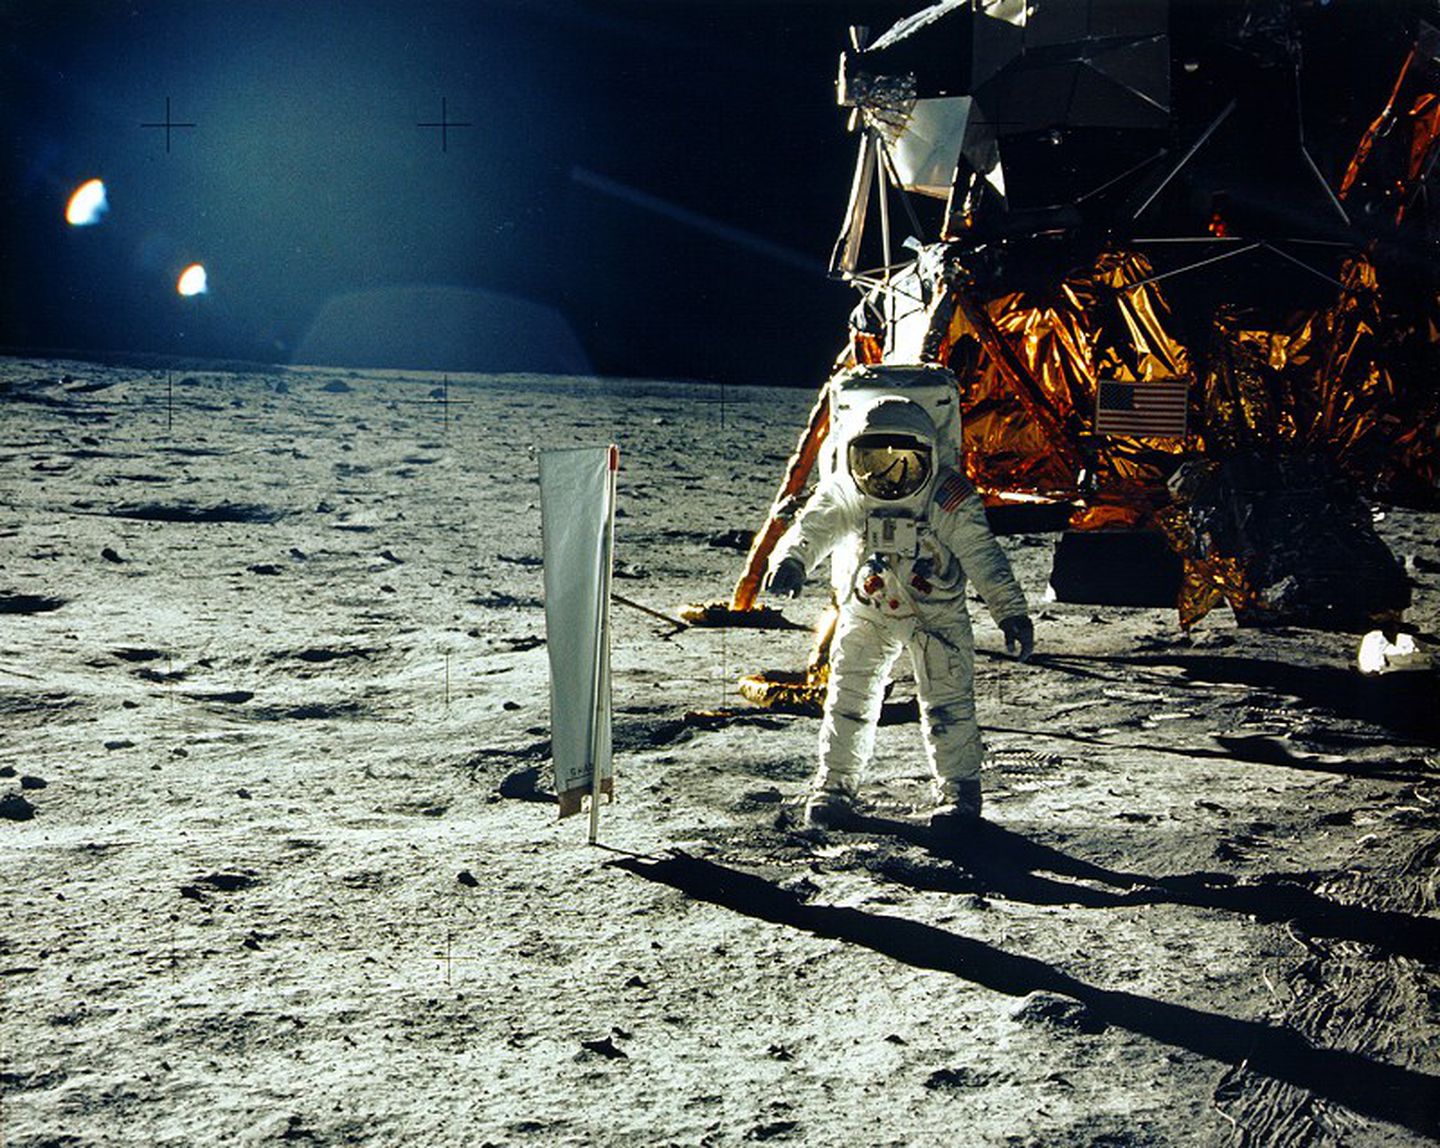 Apollo 11 landing site, Sea of Tranquility, Moon